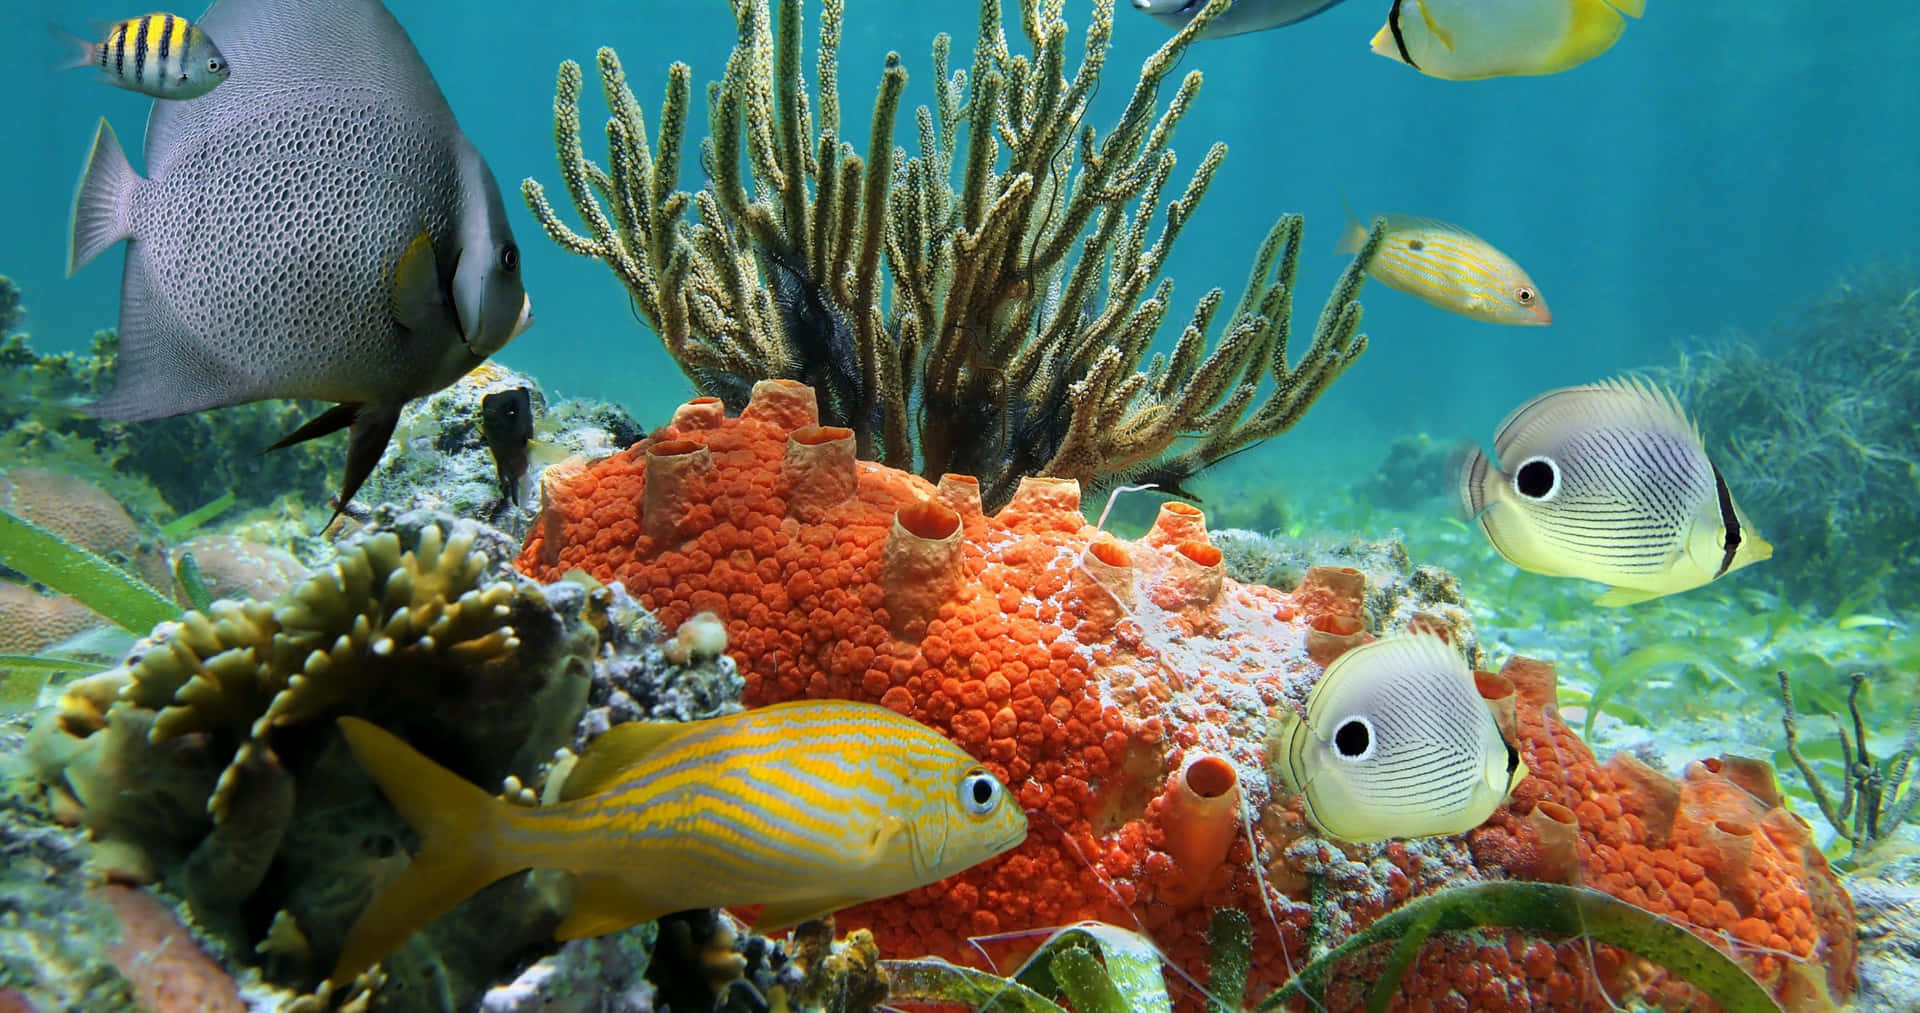 Stunning Underwater Coral Reef Scenery